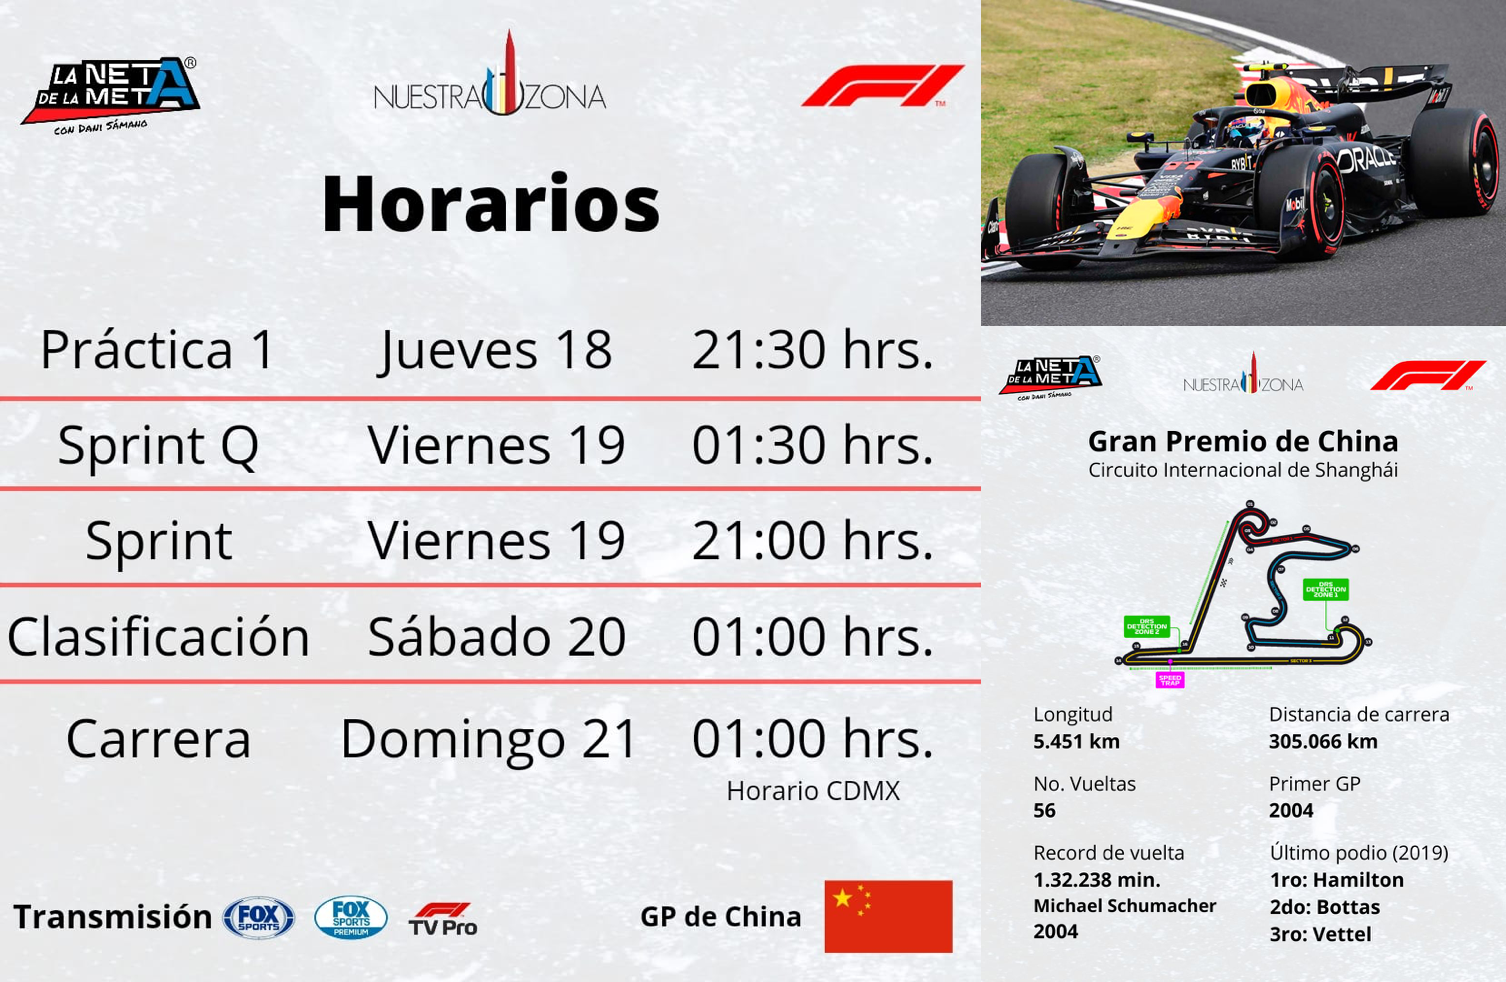 Horario de Gran Premio de China